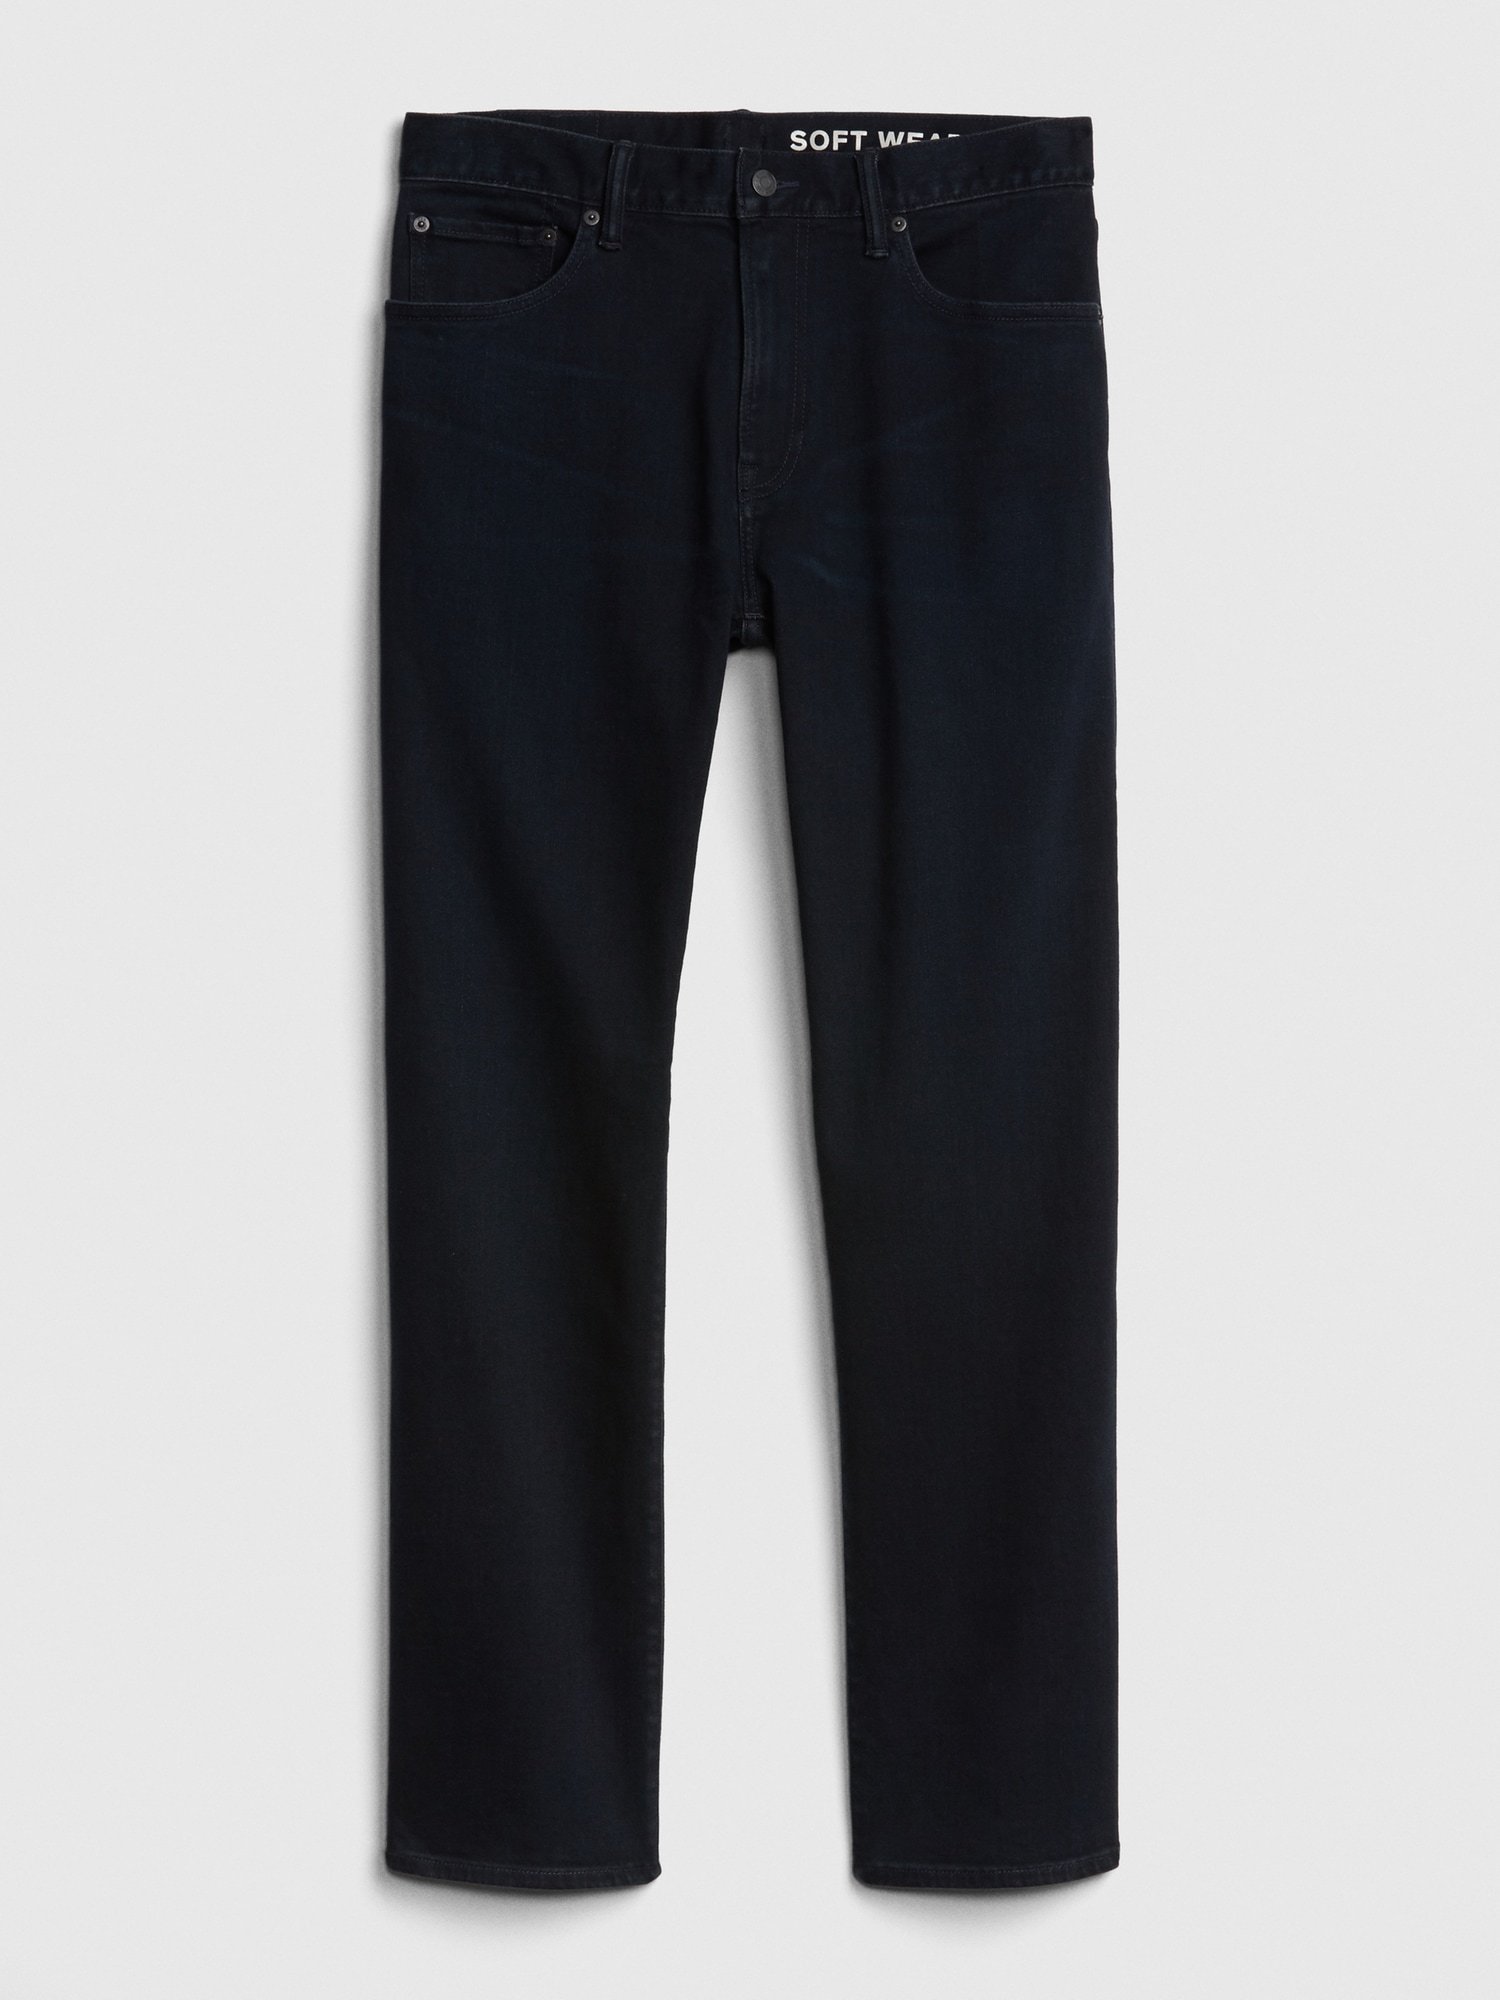 Soft Wear Standard Jeans with GapFlex